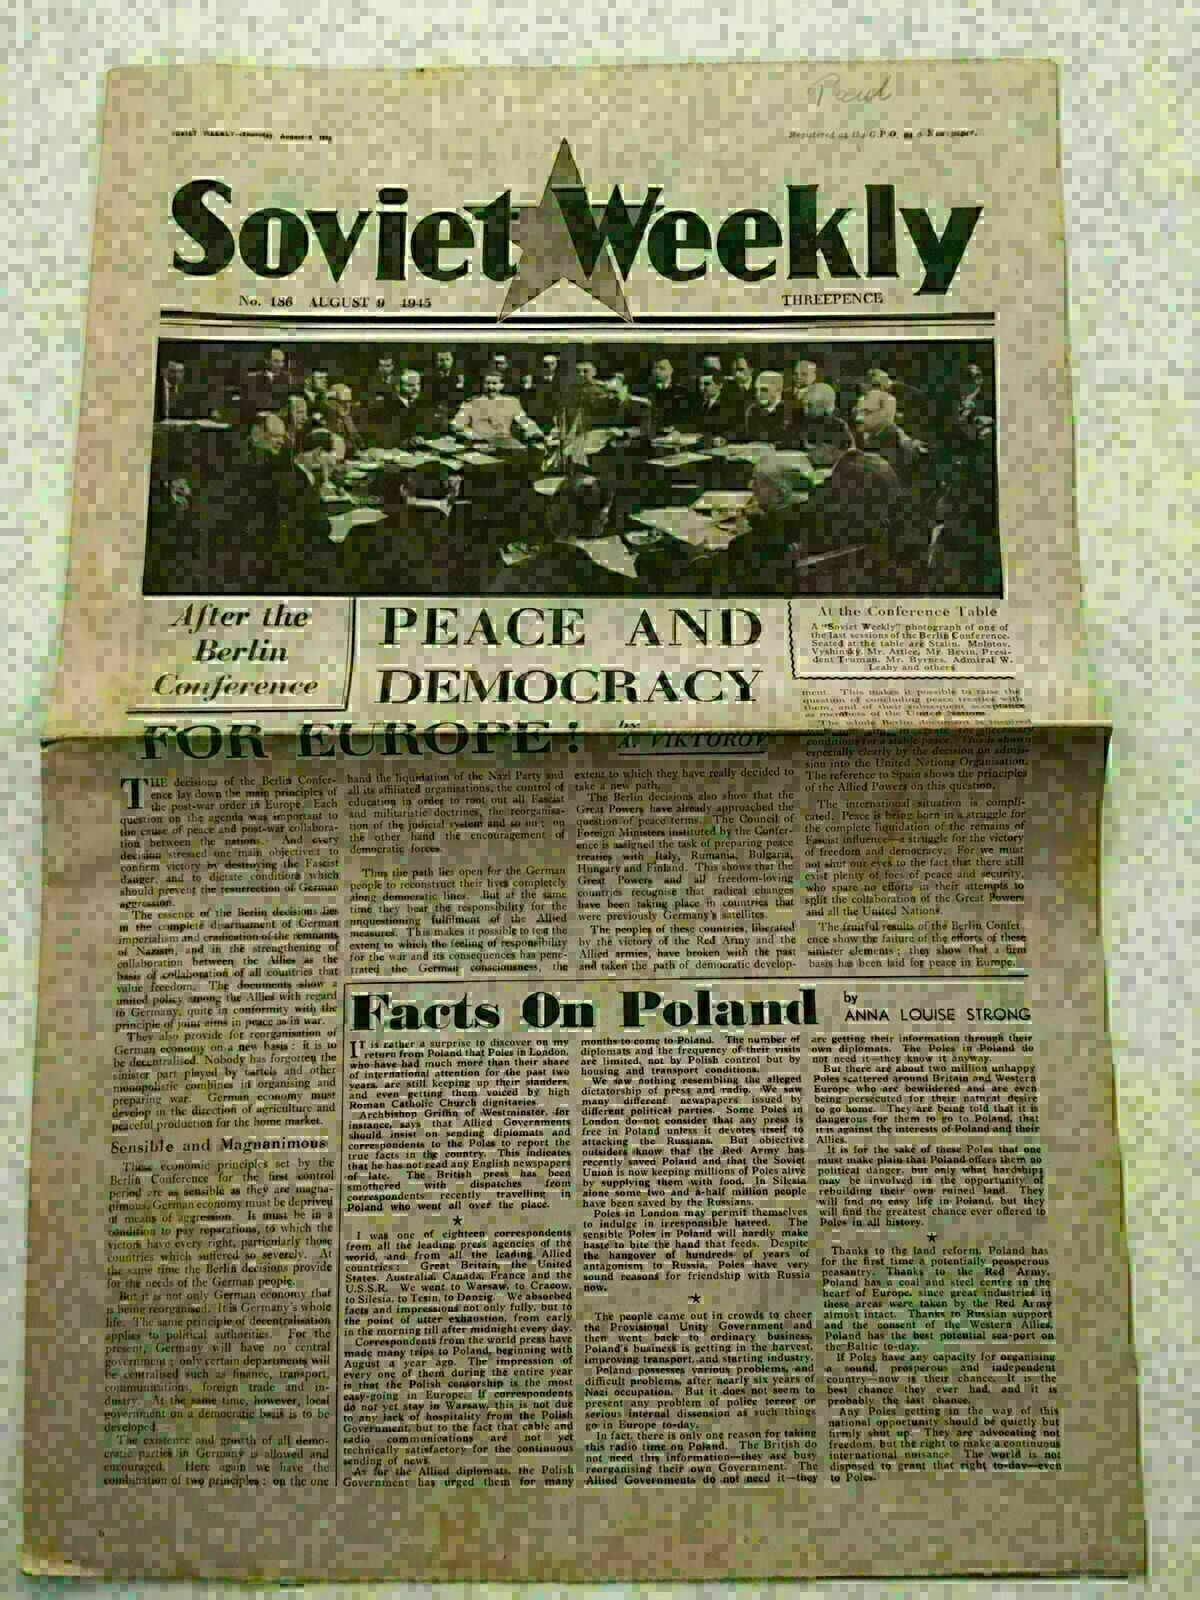 KL) USSR Soviet Weekly Newspaper Joseph Stalin Truman Atlee Peace August 9 1945